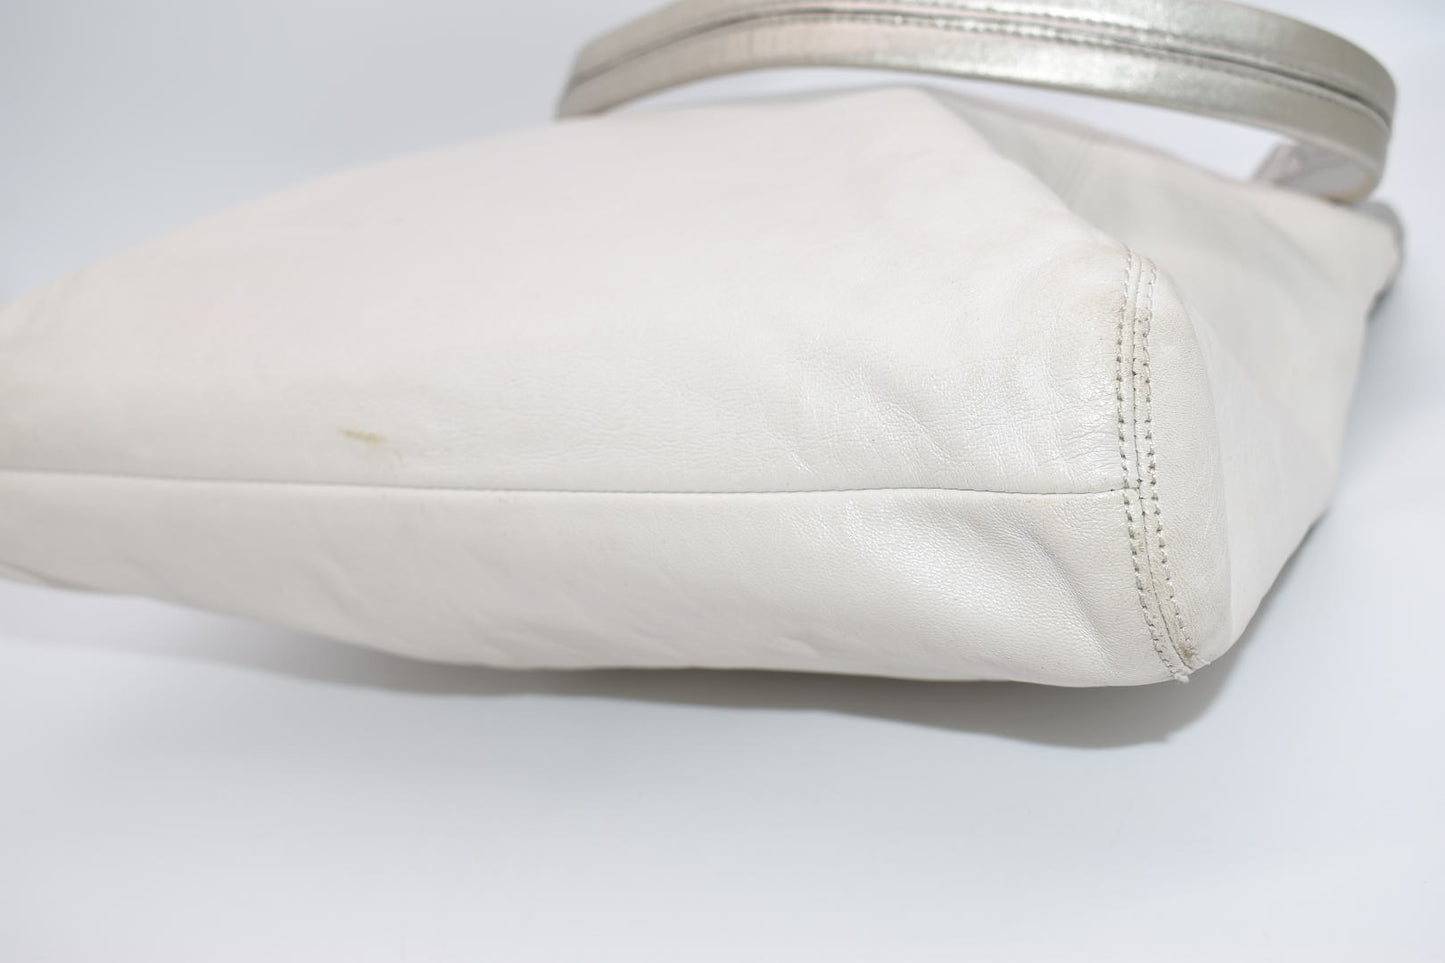 COACH Ashley F17605 Shoulder Bag in "White & Silver"